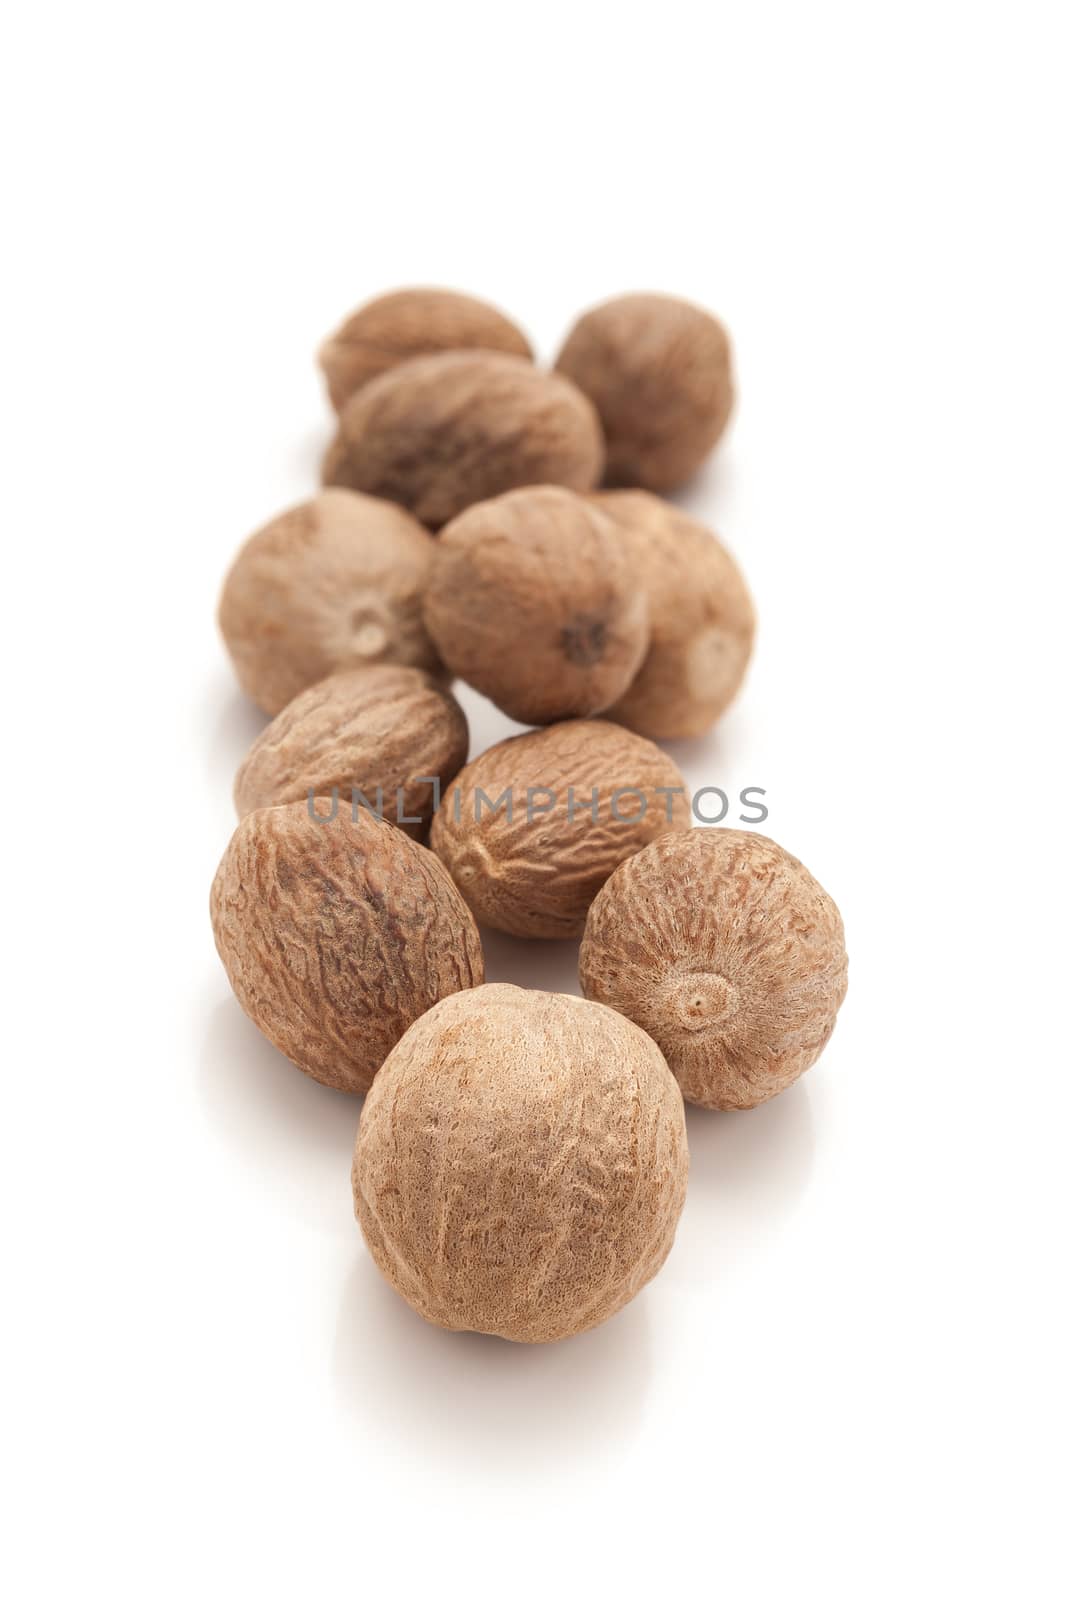 Row of Organic Nutmeg Seed or Jaiphal (Myristica fragrans) isolated on white background.